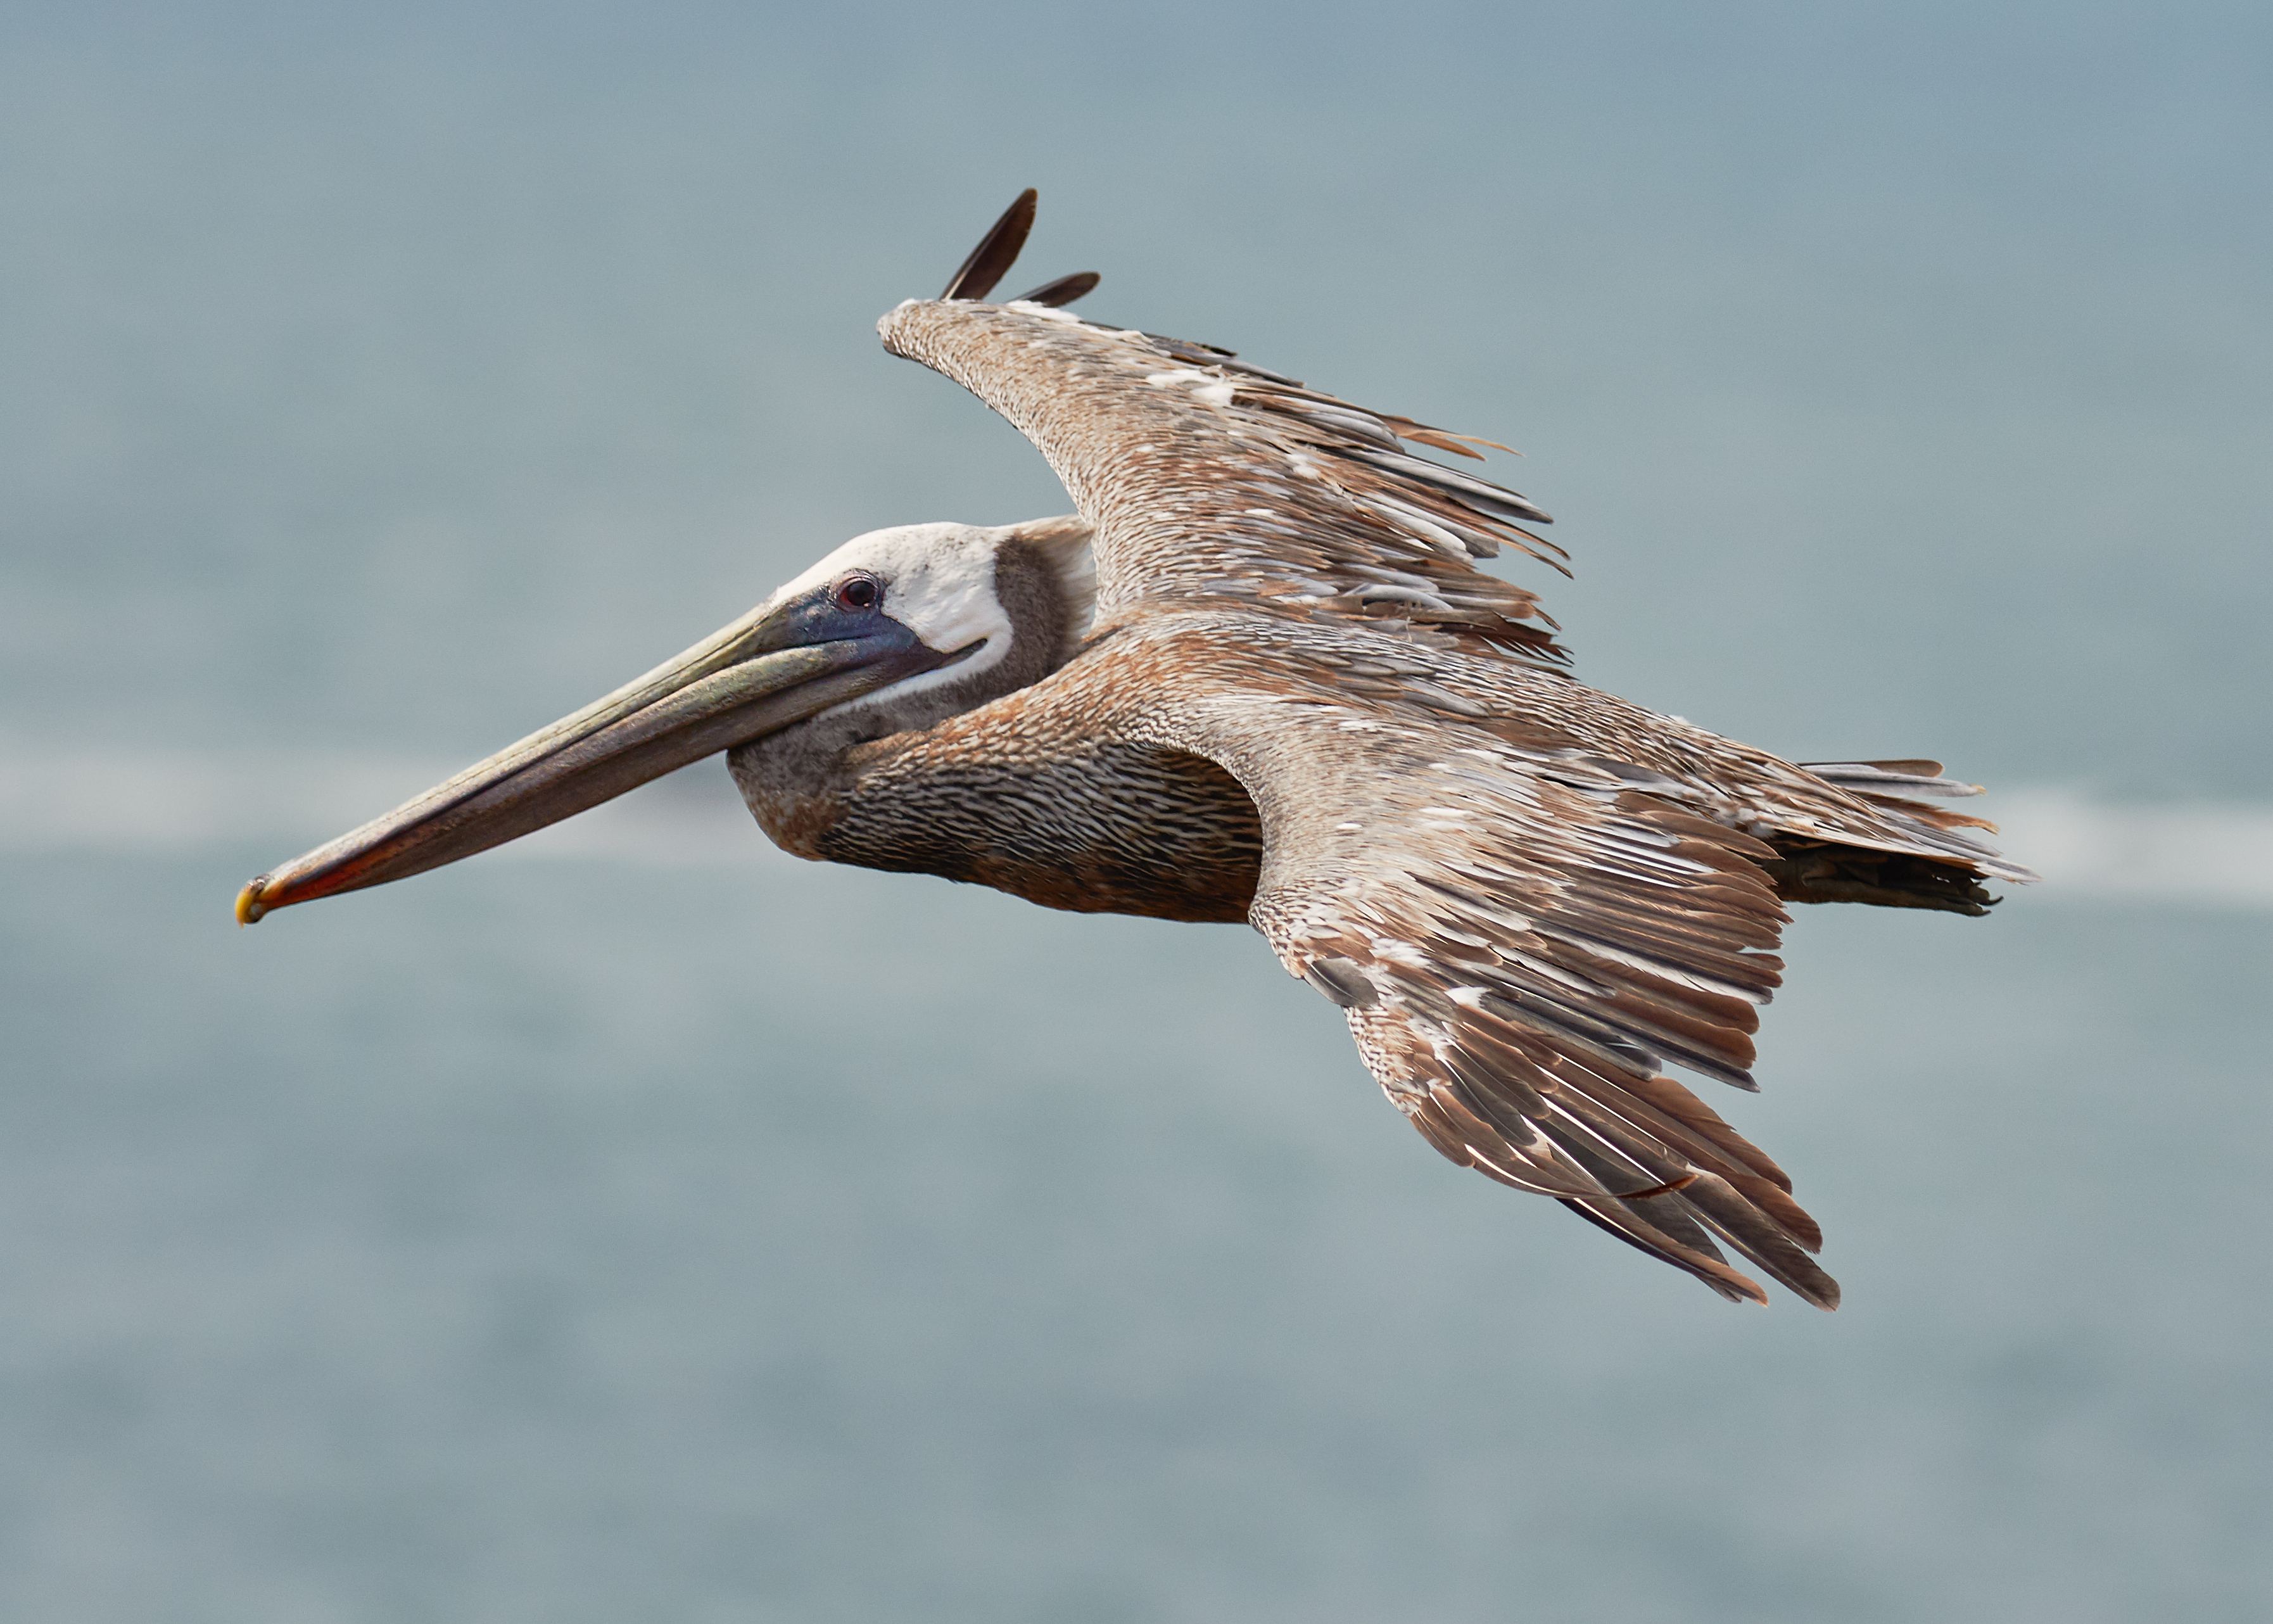 Brown pelican in flight at Rodeo Beach